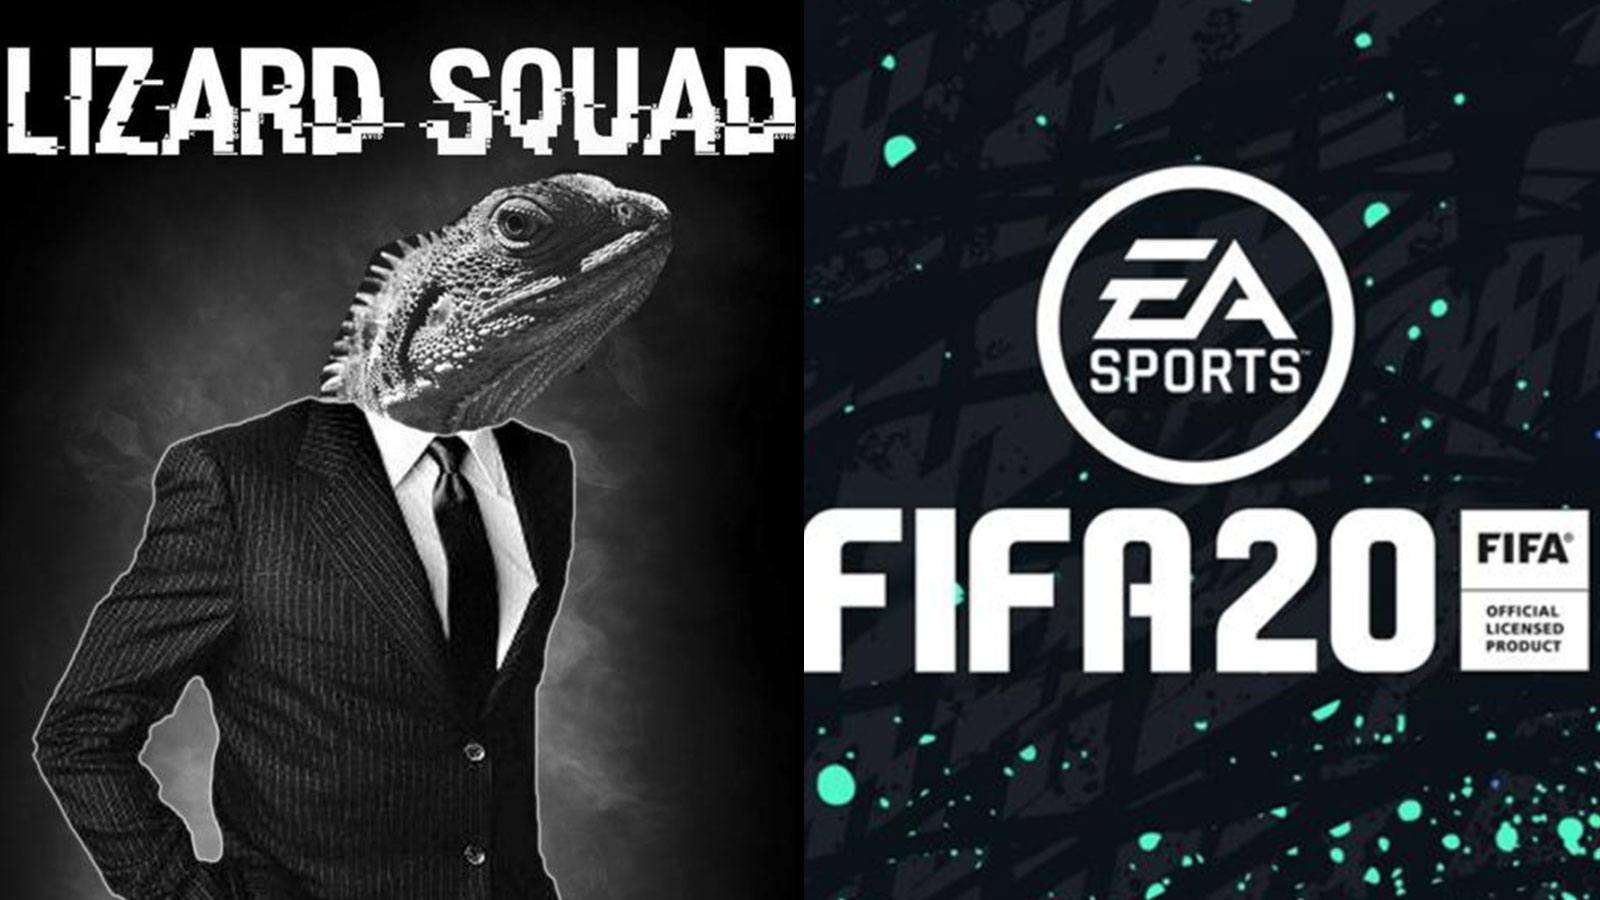 Lizard Squad | Electronic Arts